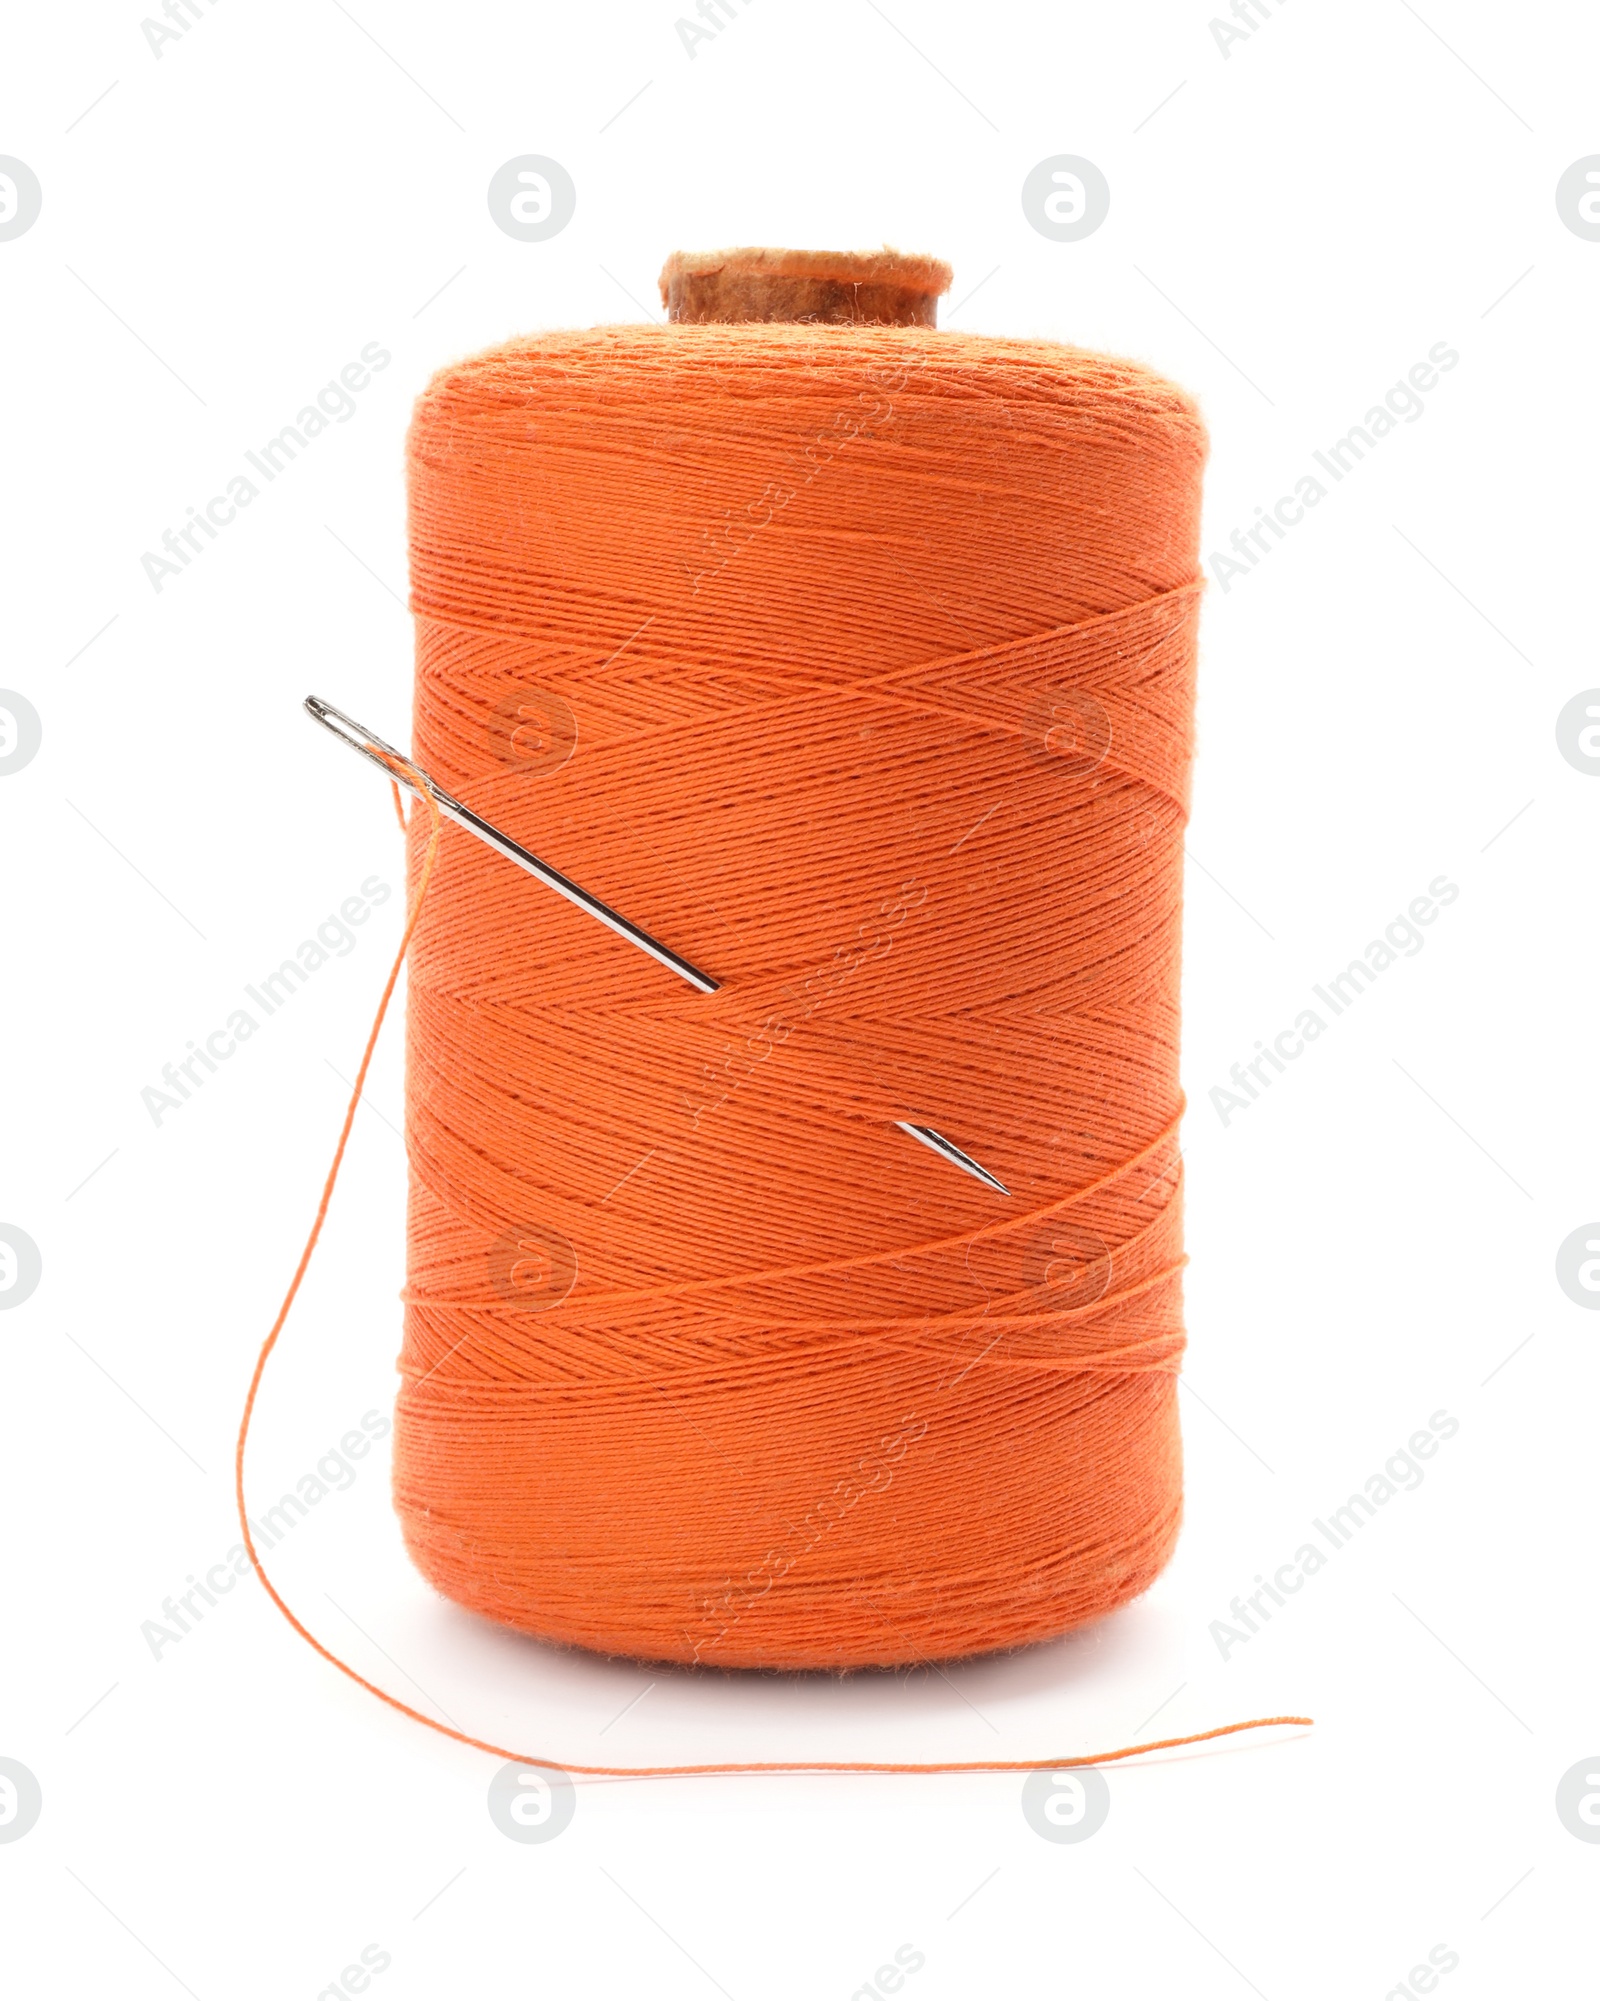 Photo of Orange sewing thread with needle on white background